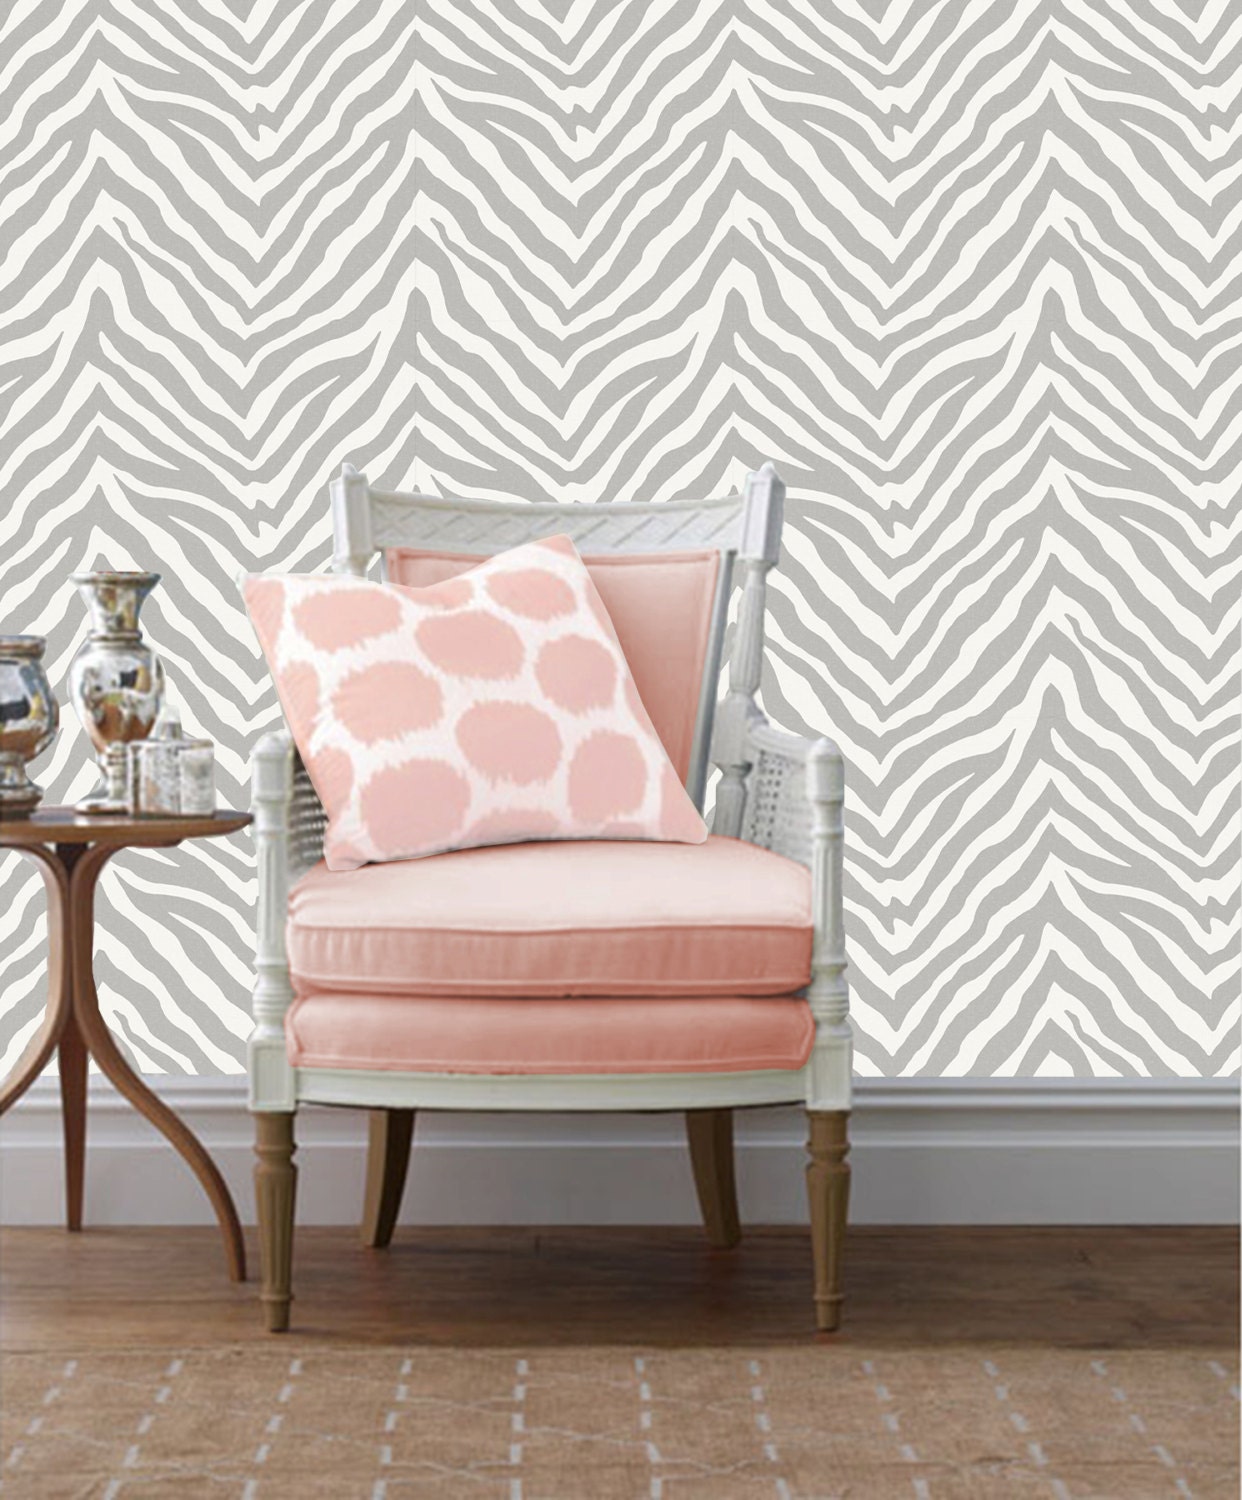 zebra wallpaper peel stick